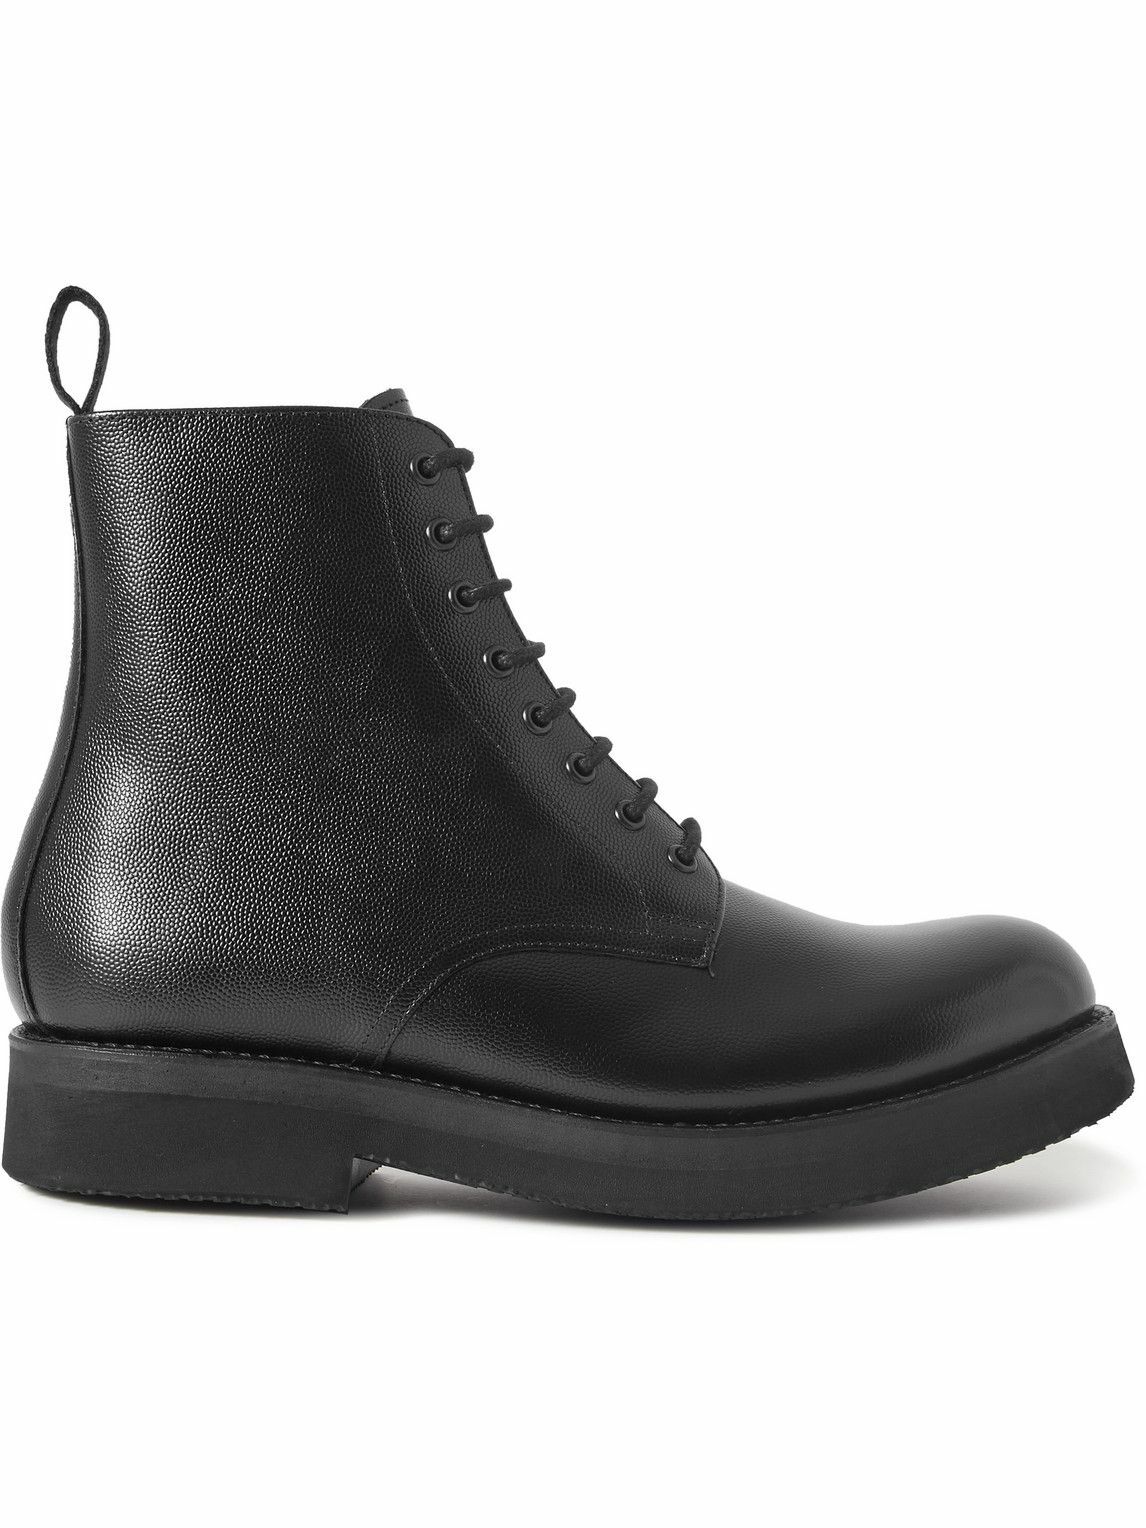 Photo: Grenson - Dudley Pebble-Grain Leather Boots - Black